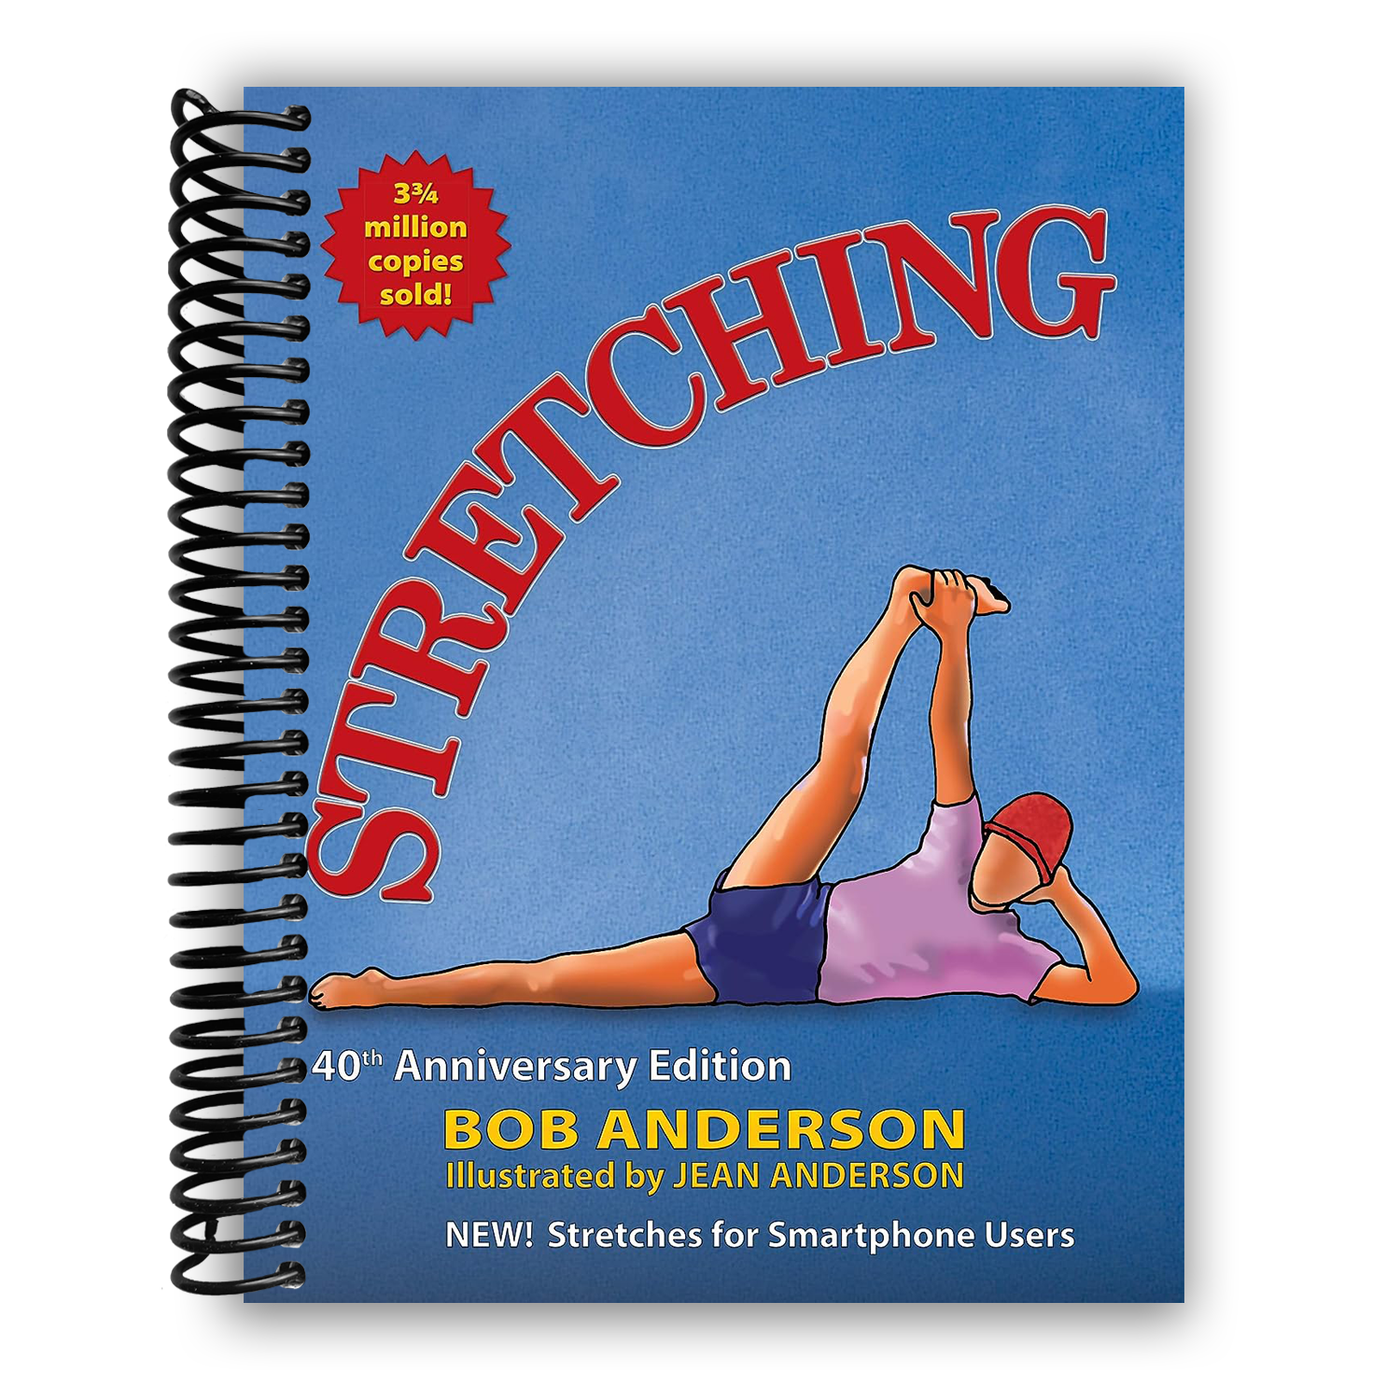 Stretching: 40th Anniversary Edition(Spiral Bound)